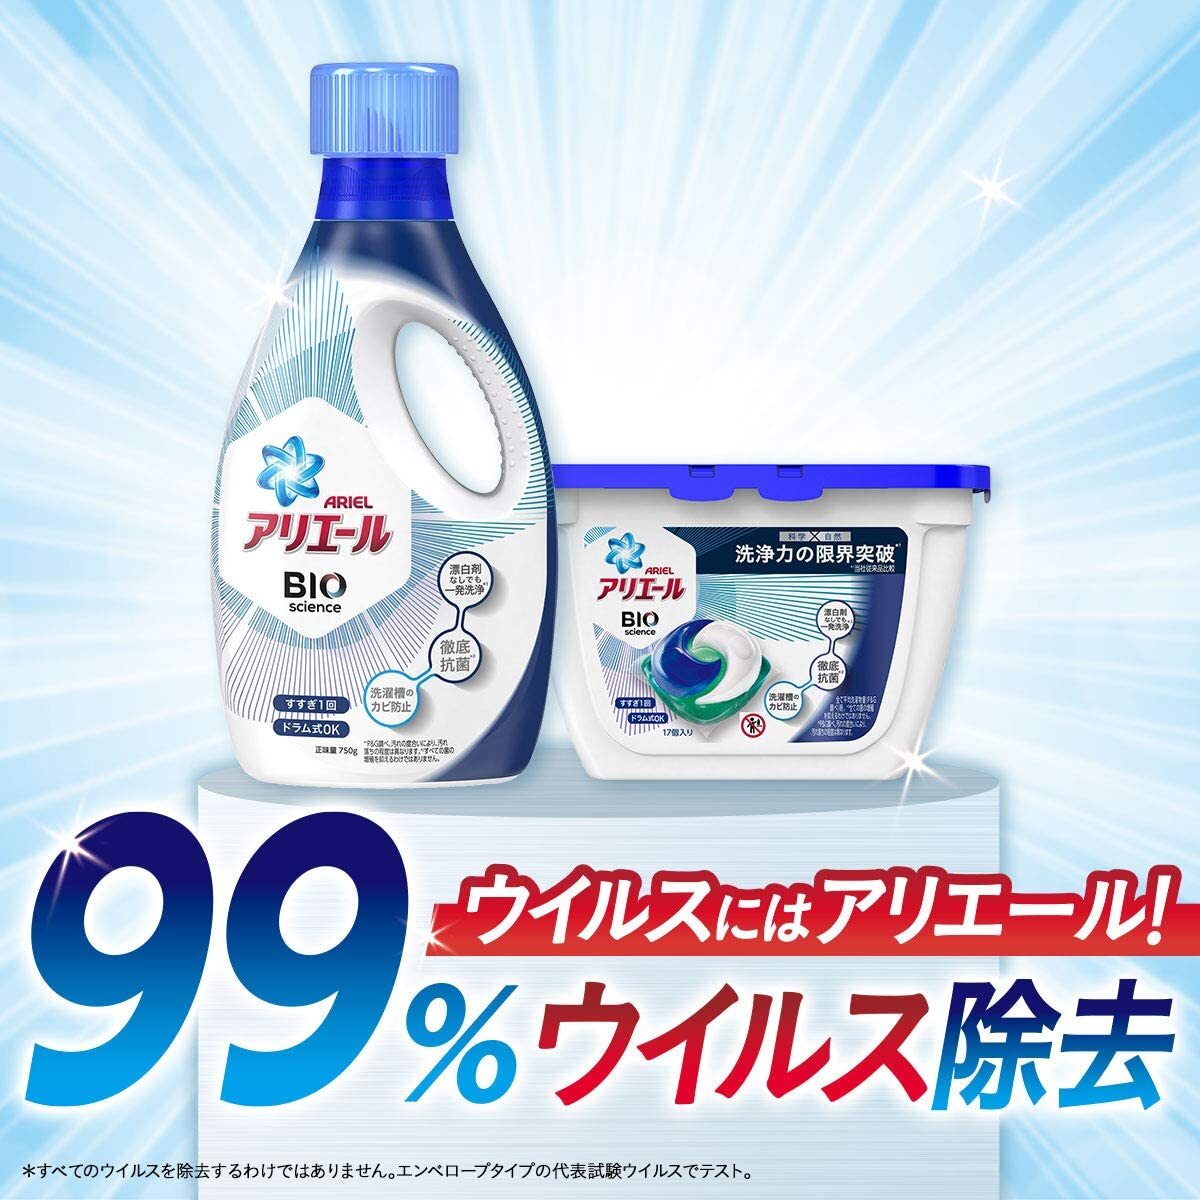 P&G Ariel BioScience Laundry Detergent Gel Antibacterial 750g